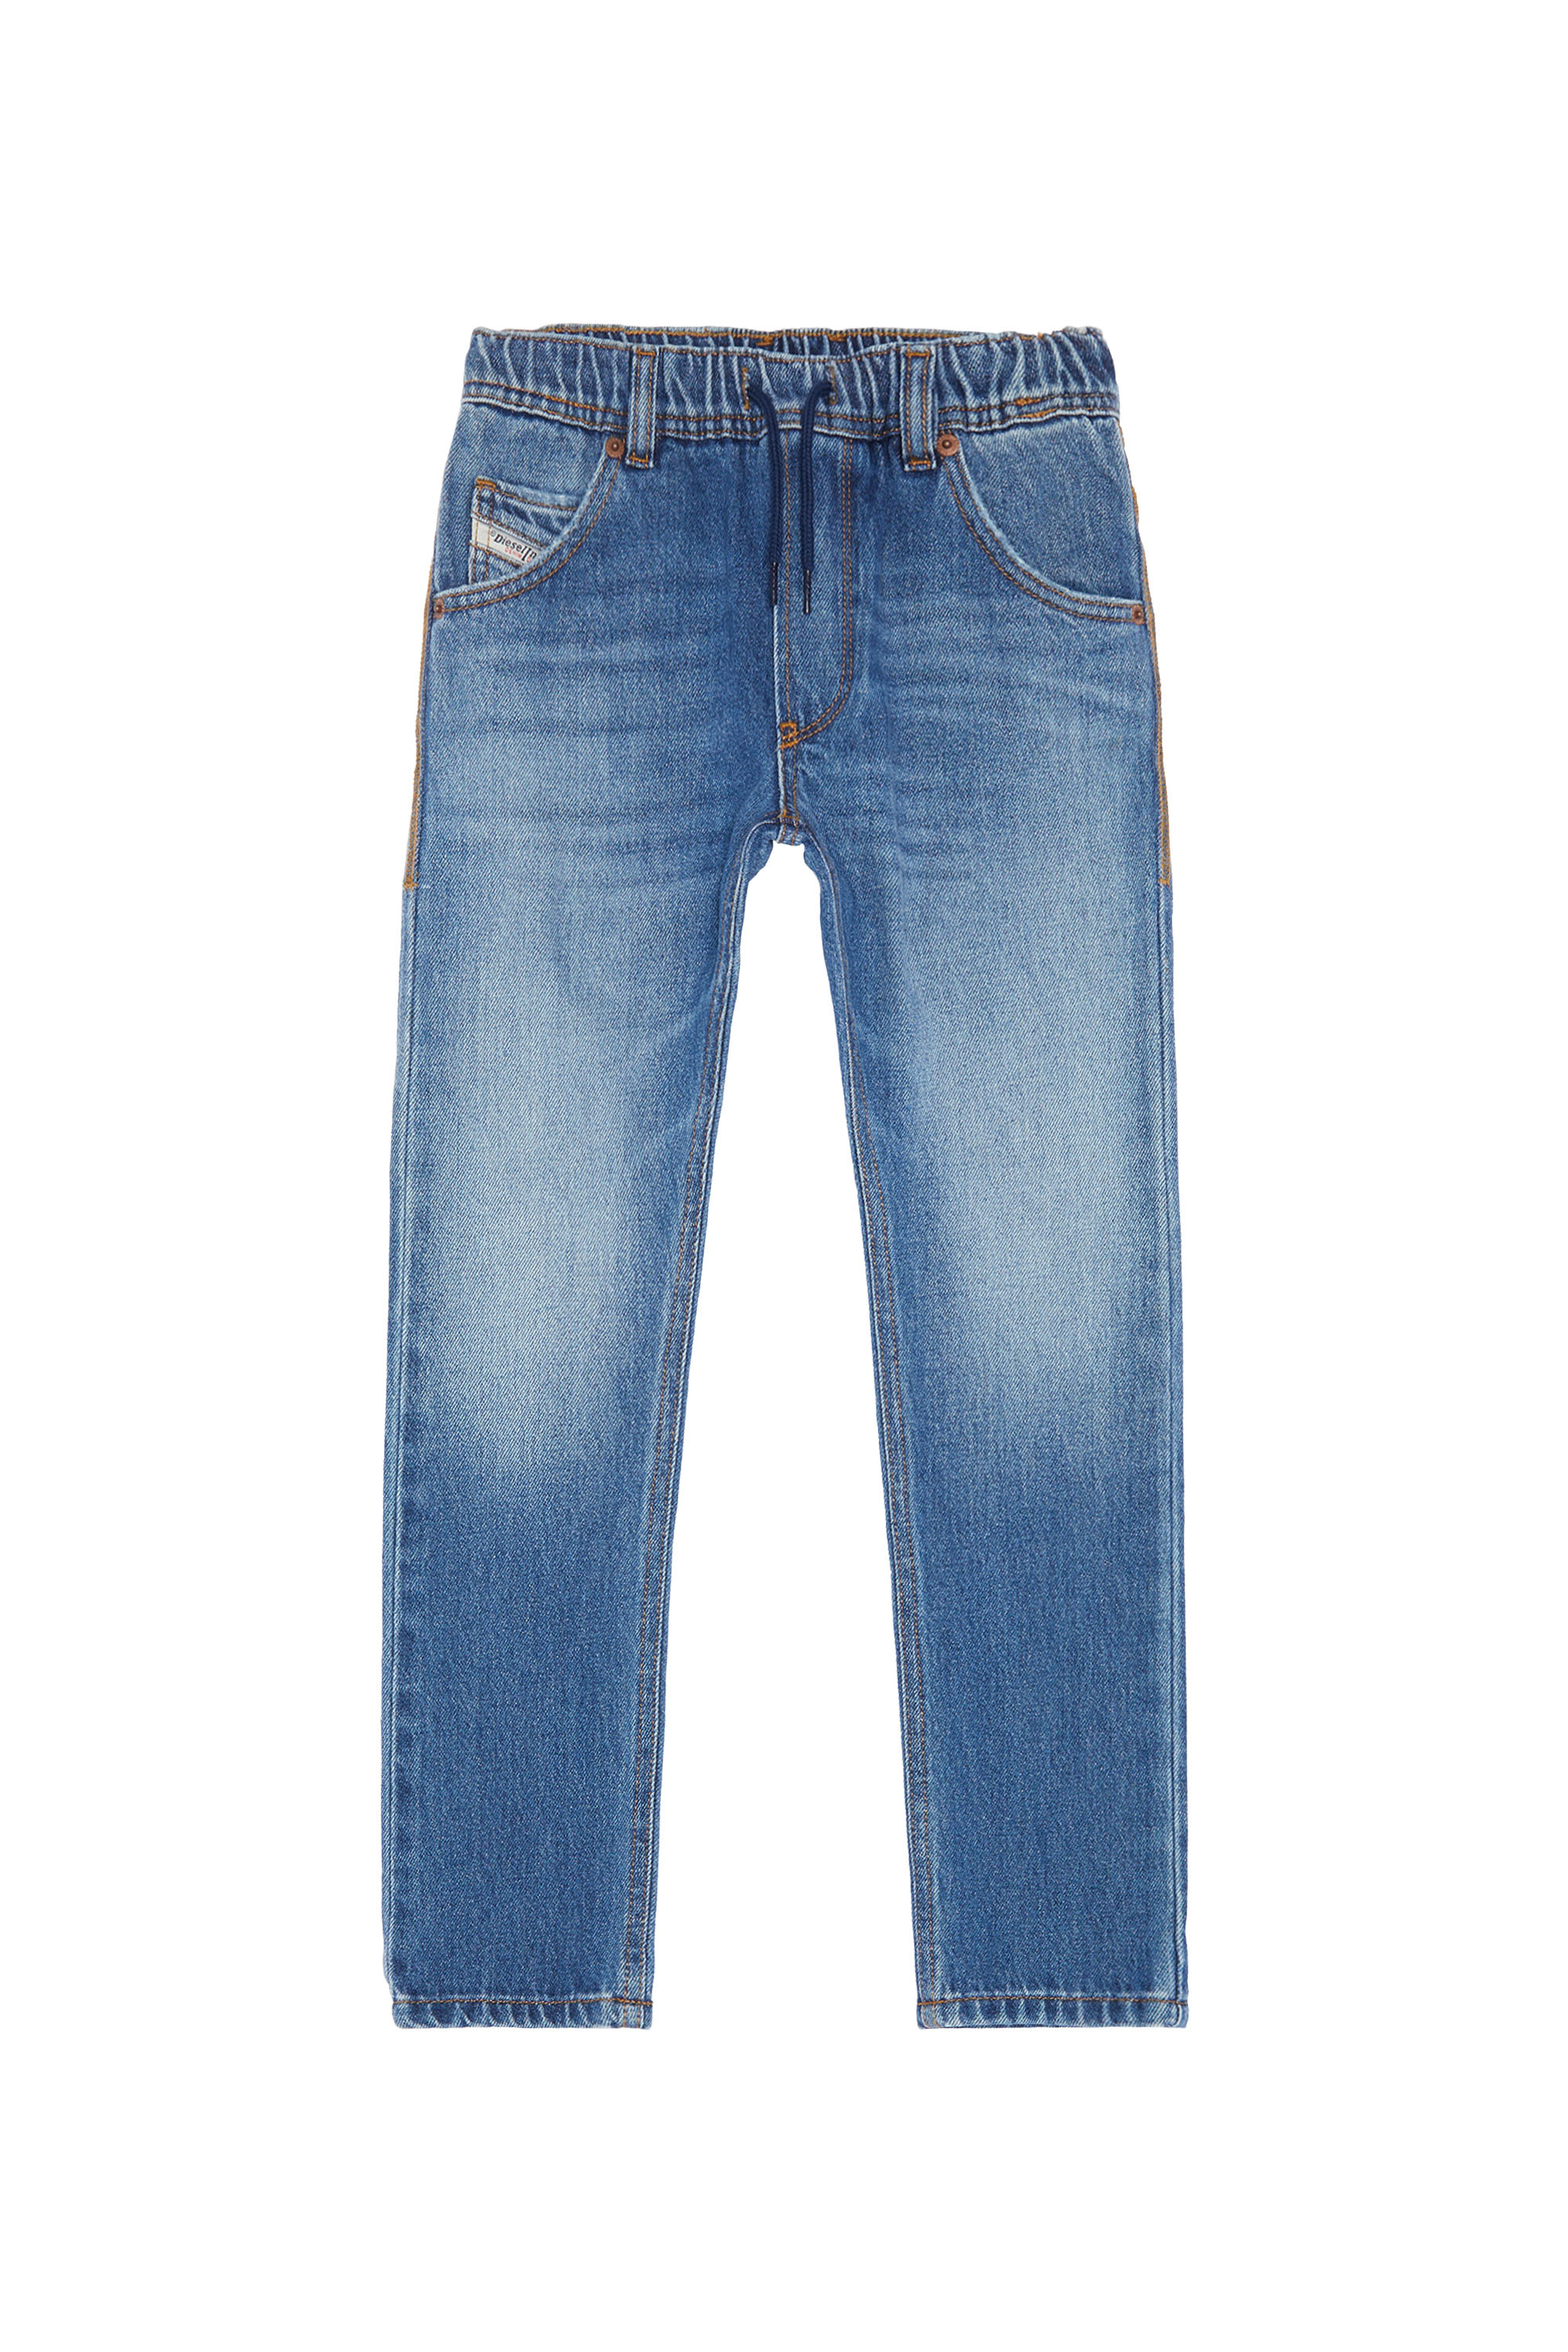 KROOLEY JOGGJEANS-J, Medium blue - Jeans